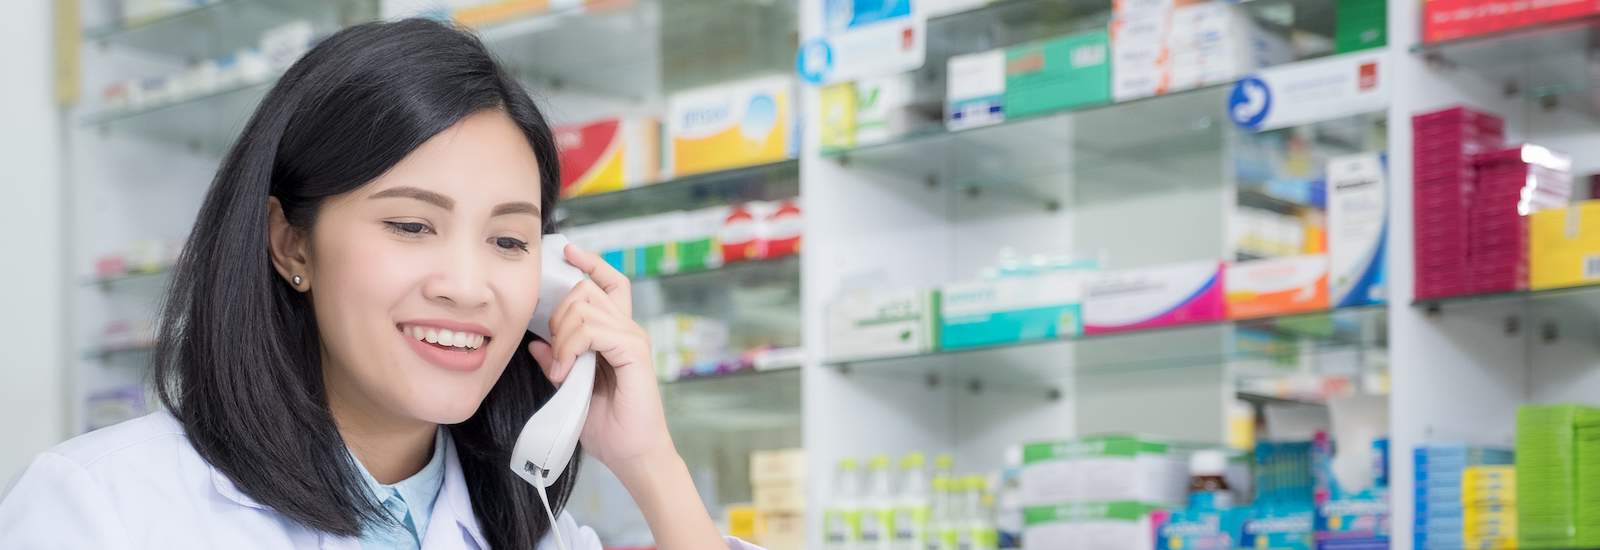 Pharmacy worker talking by phone